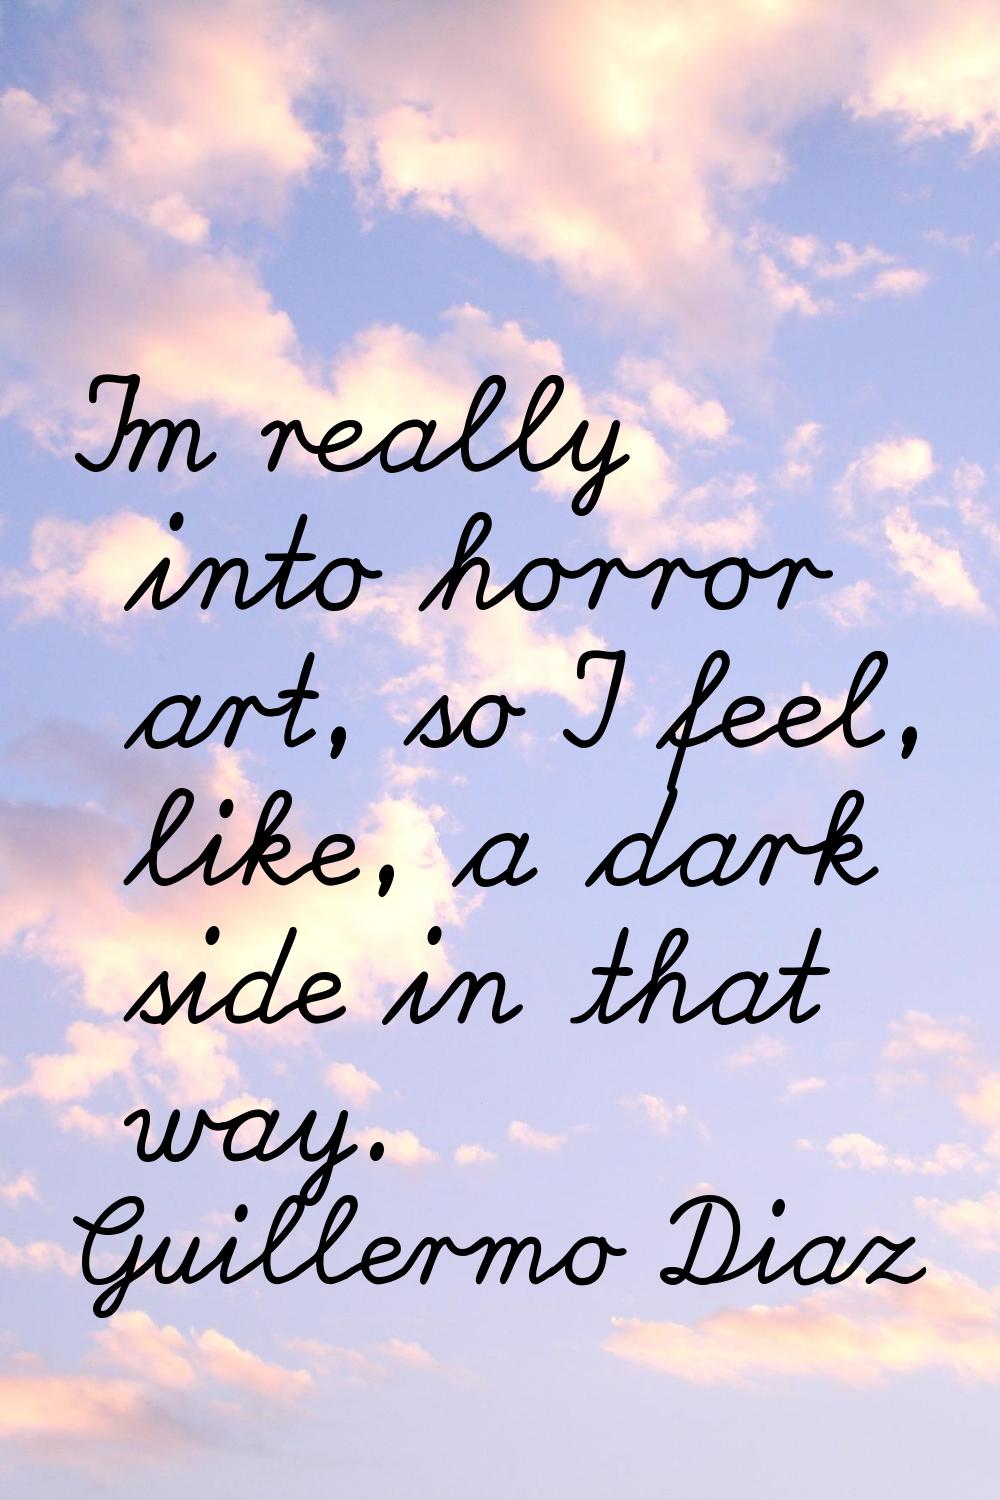 I'm really into horror art, so I feel, like, a dark side in that way.